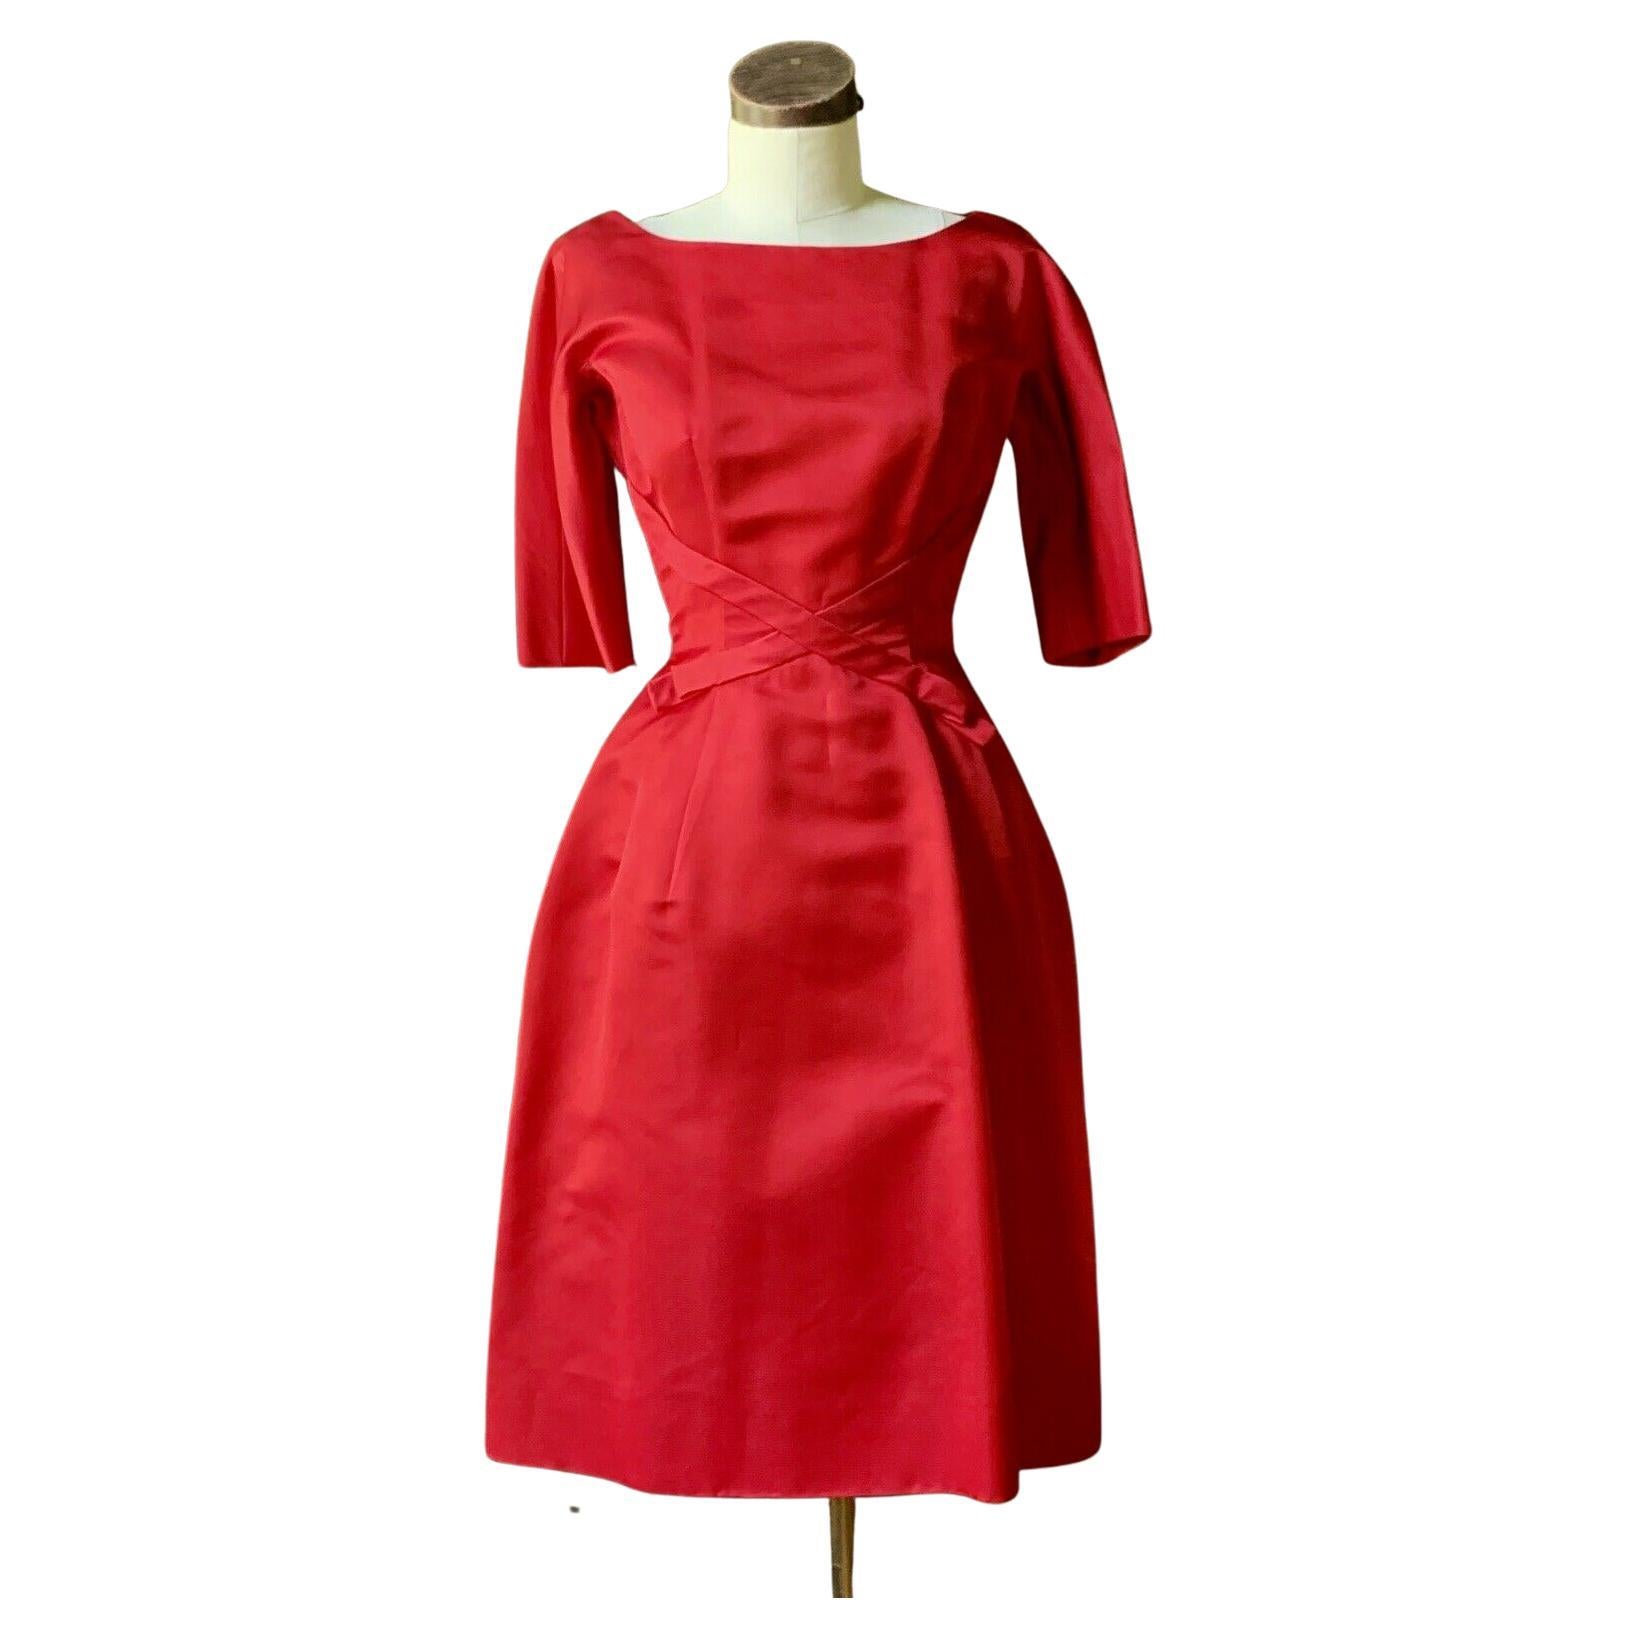 Rare HERBERT SONDHEIM 1950s Vintage Red Satin COUTURE Cocktail Dress XS/S